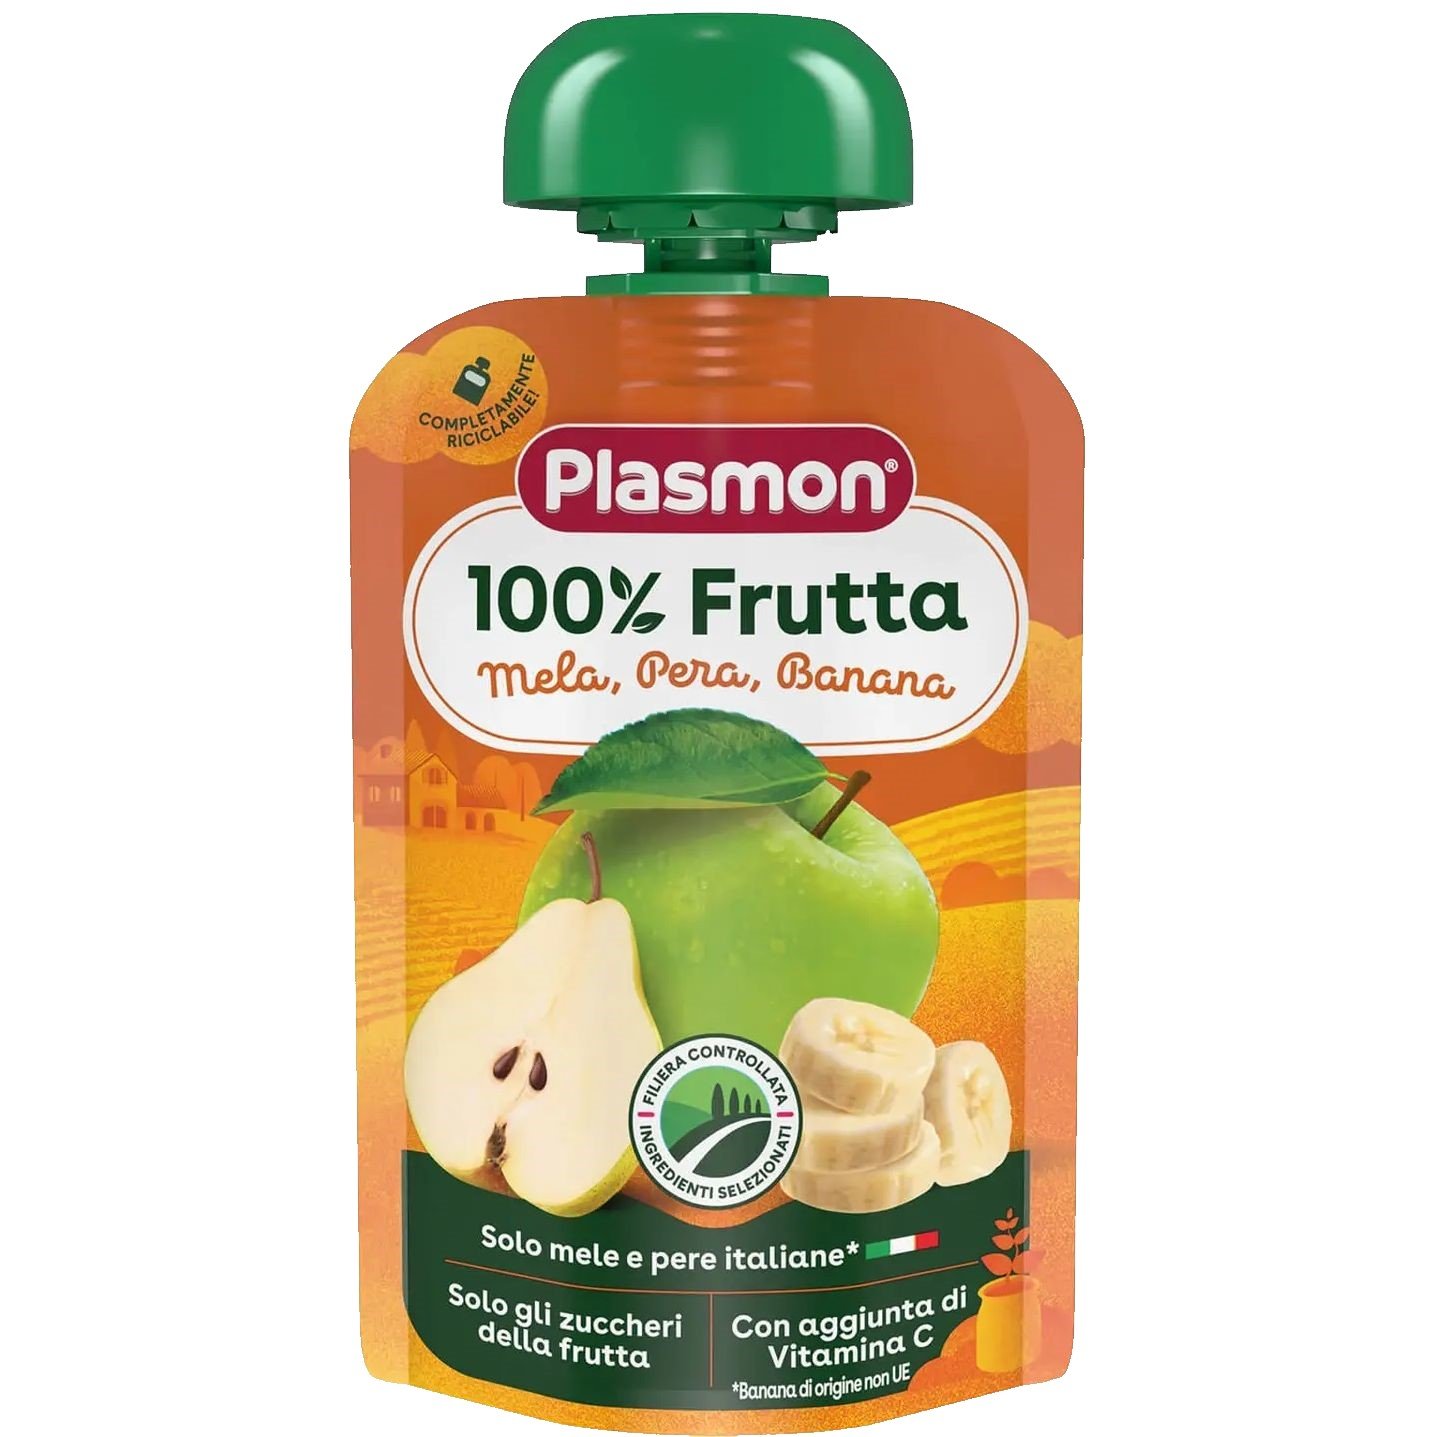 Пюре Plasmon Merenda 100% Frutta Яблоко, груша и банан с витаминами, 100 г - фото 1